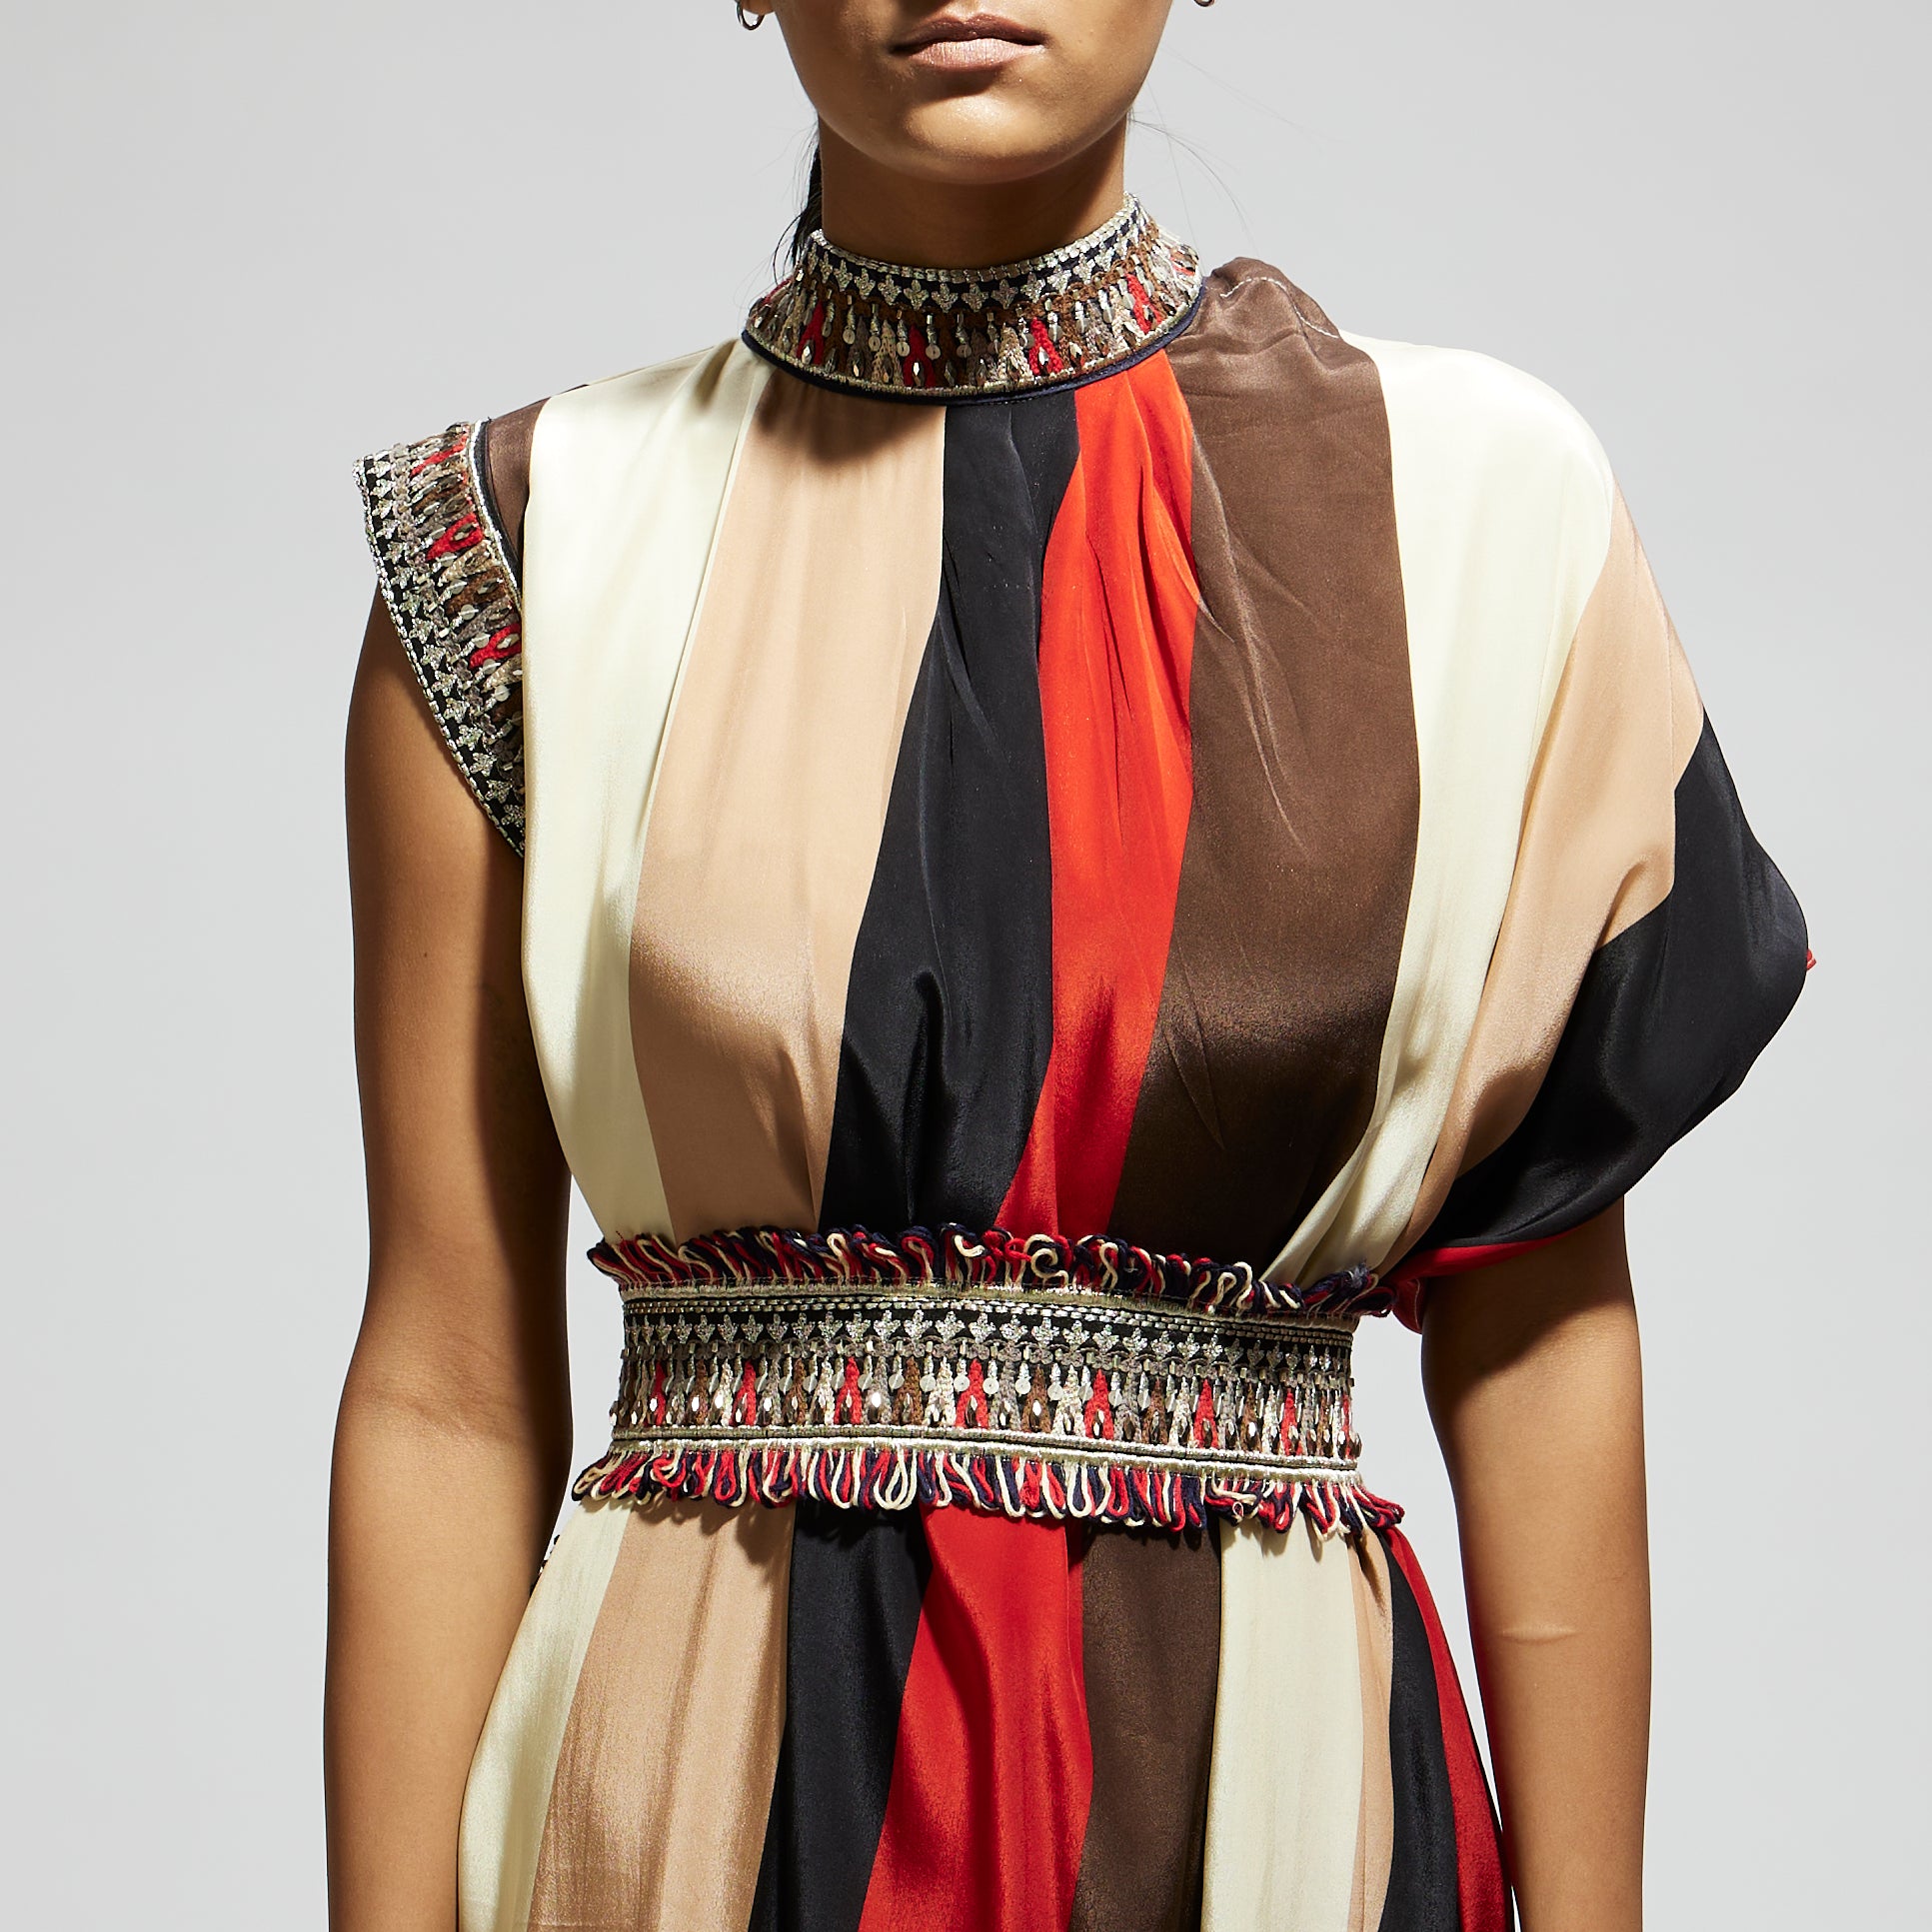 SAMSARA STRIPE PRINT COWL DRESS TEAMED WITH A BELT